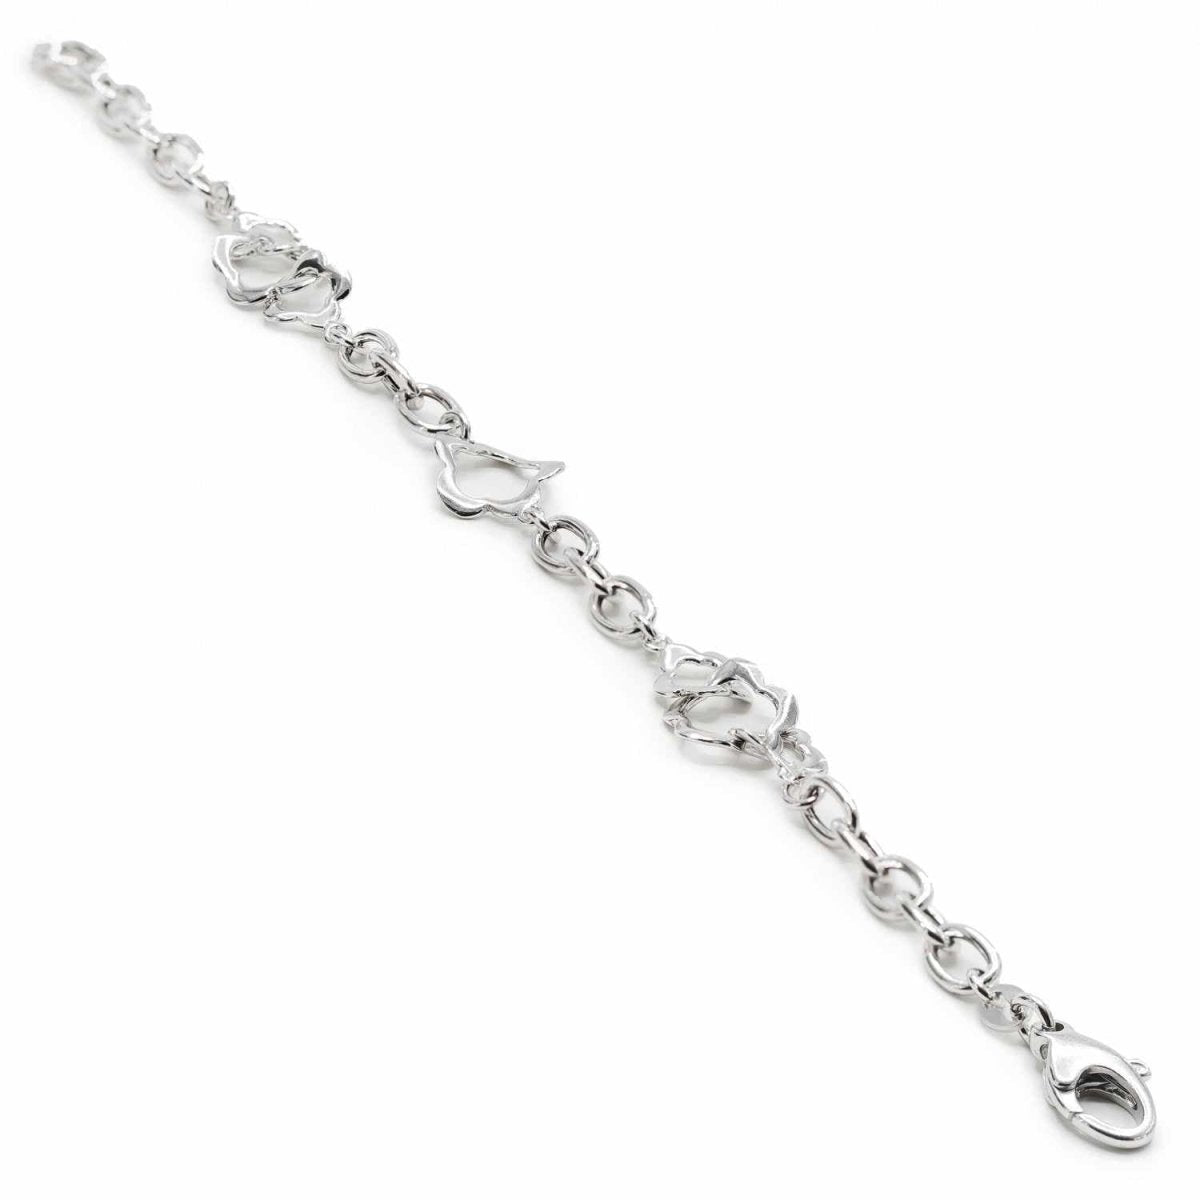 Bracelet - Bracelets silver links bracelets fine design with floral motifs